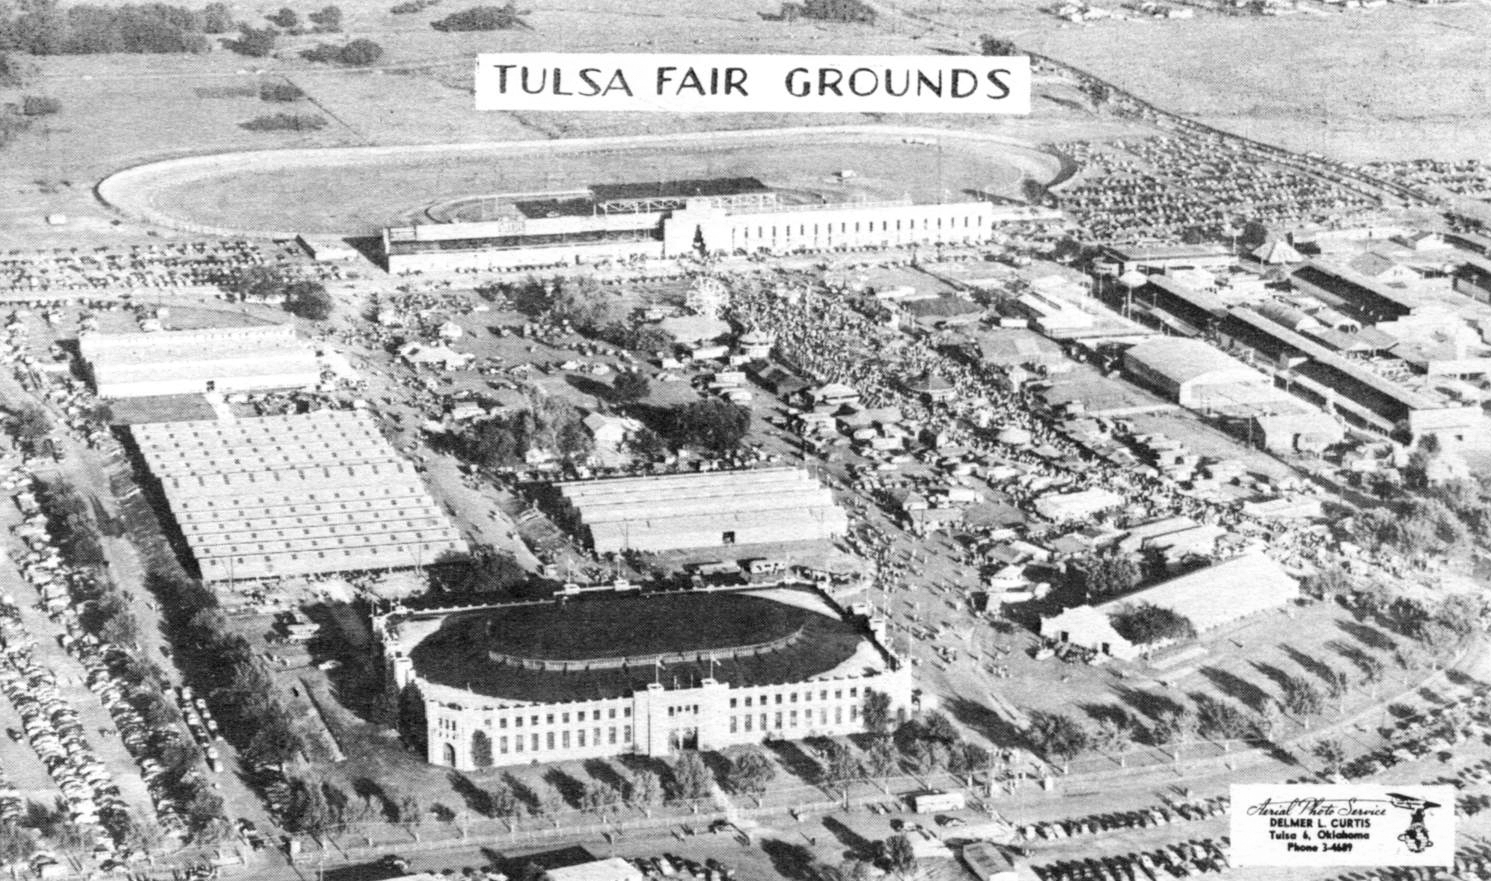 Tulsa Fairgrounds circa 1950s (Photo Credit: Oklahoma Historical Society)